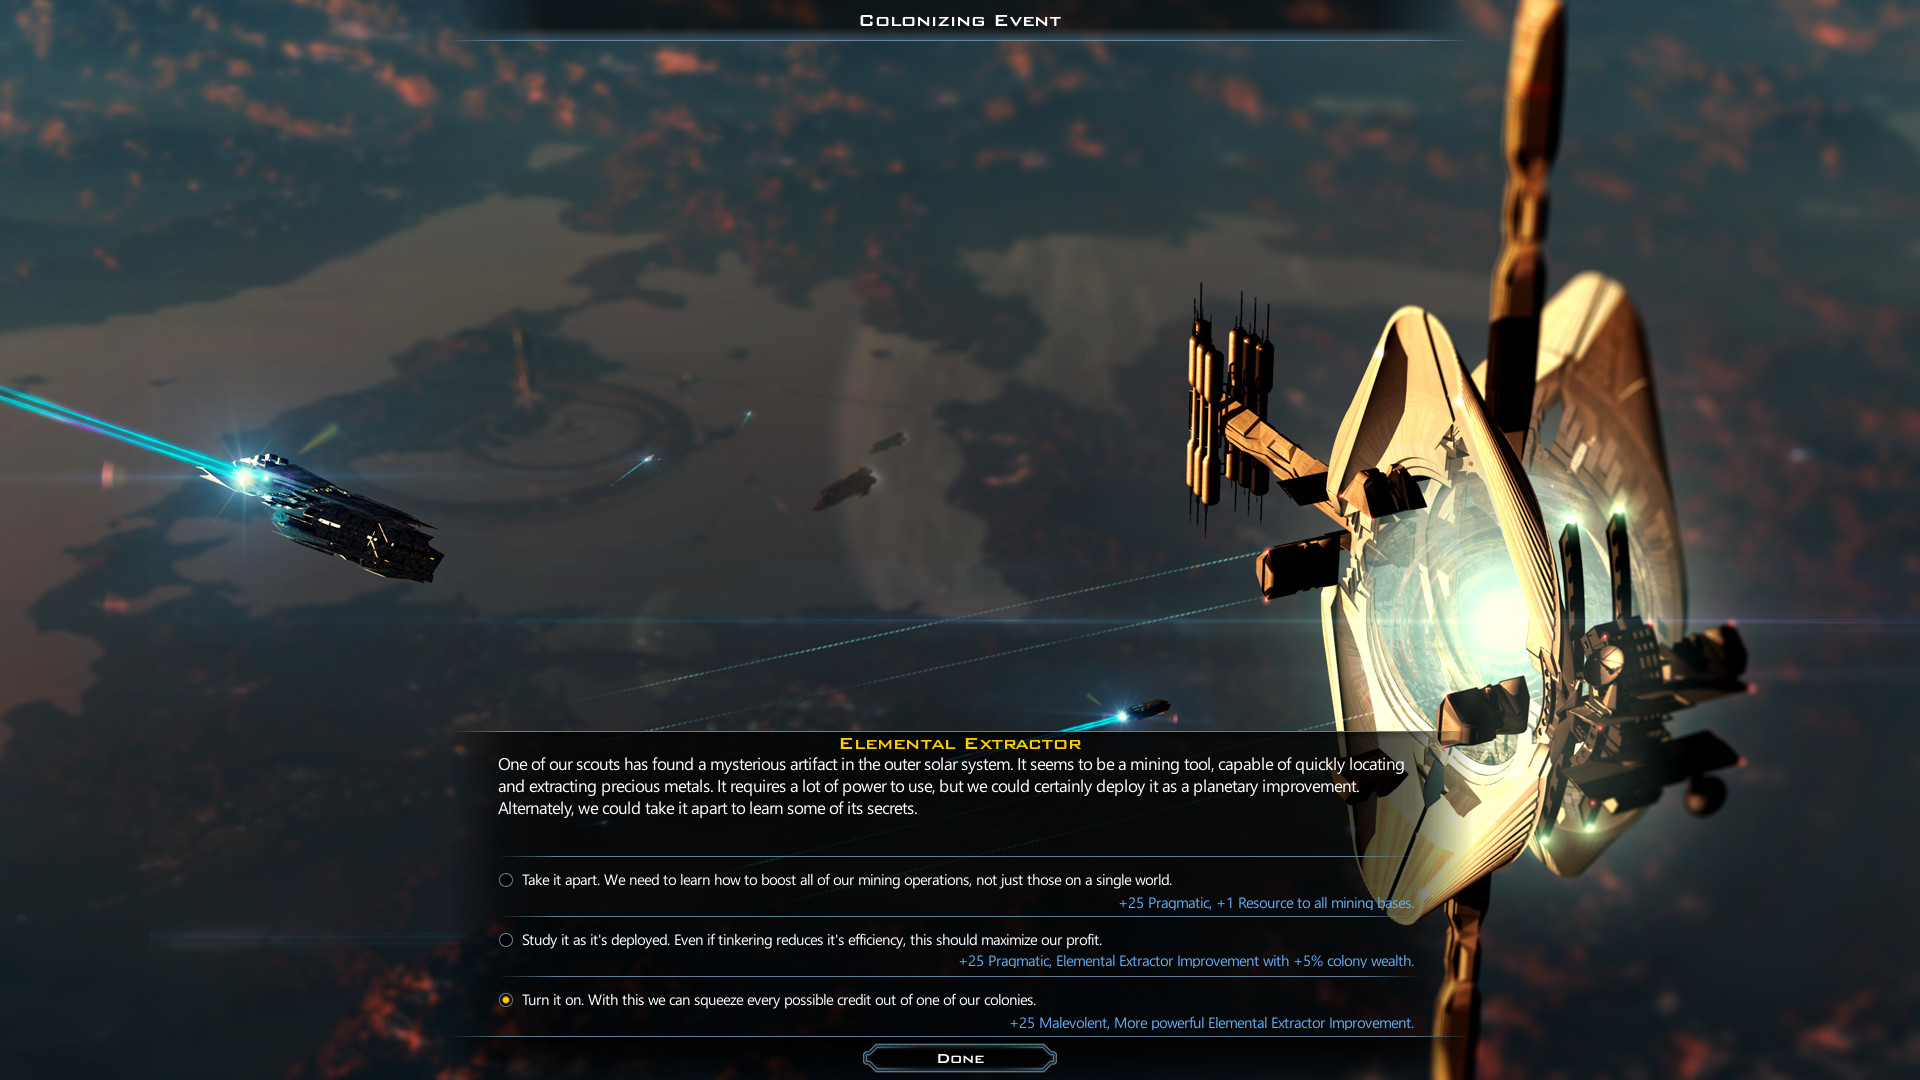 Galactic Civilizations III - Lost Treasures DLC Featured Screenshot #1